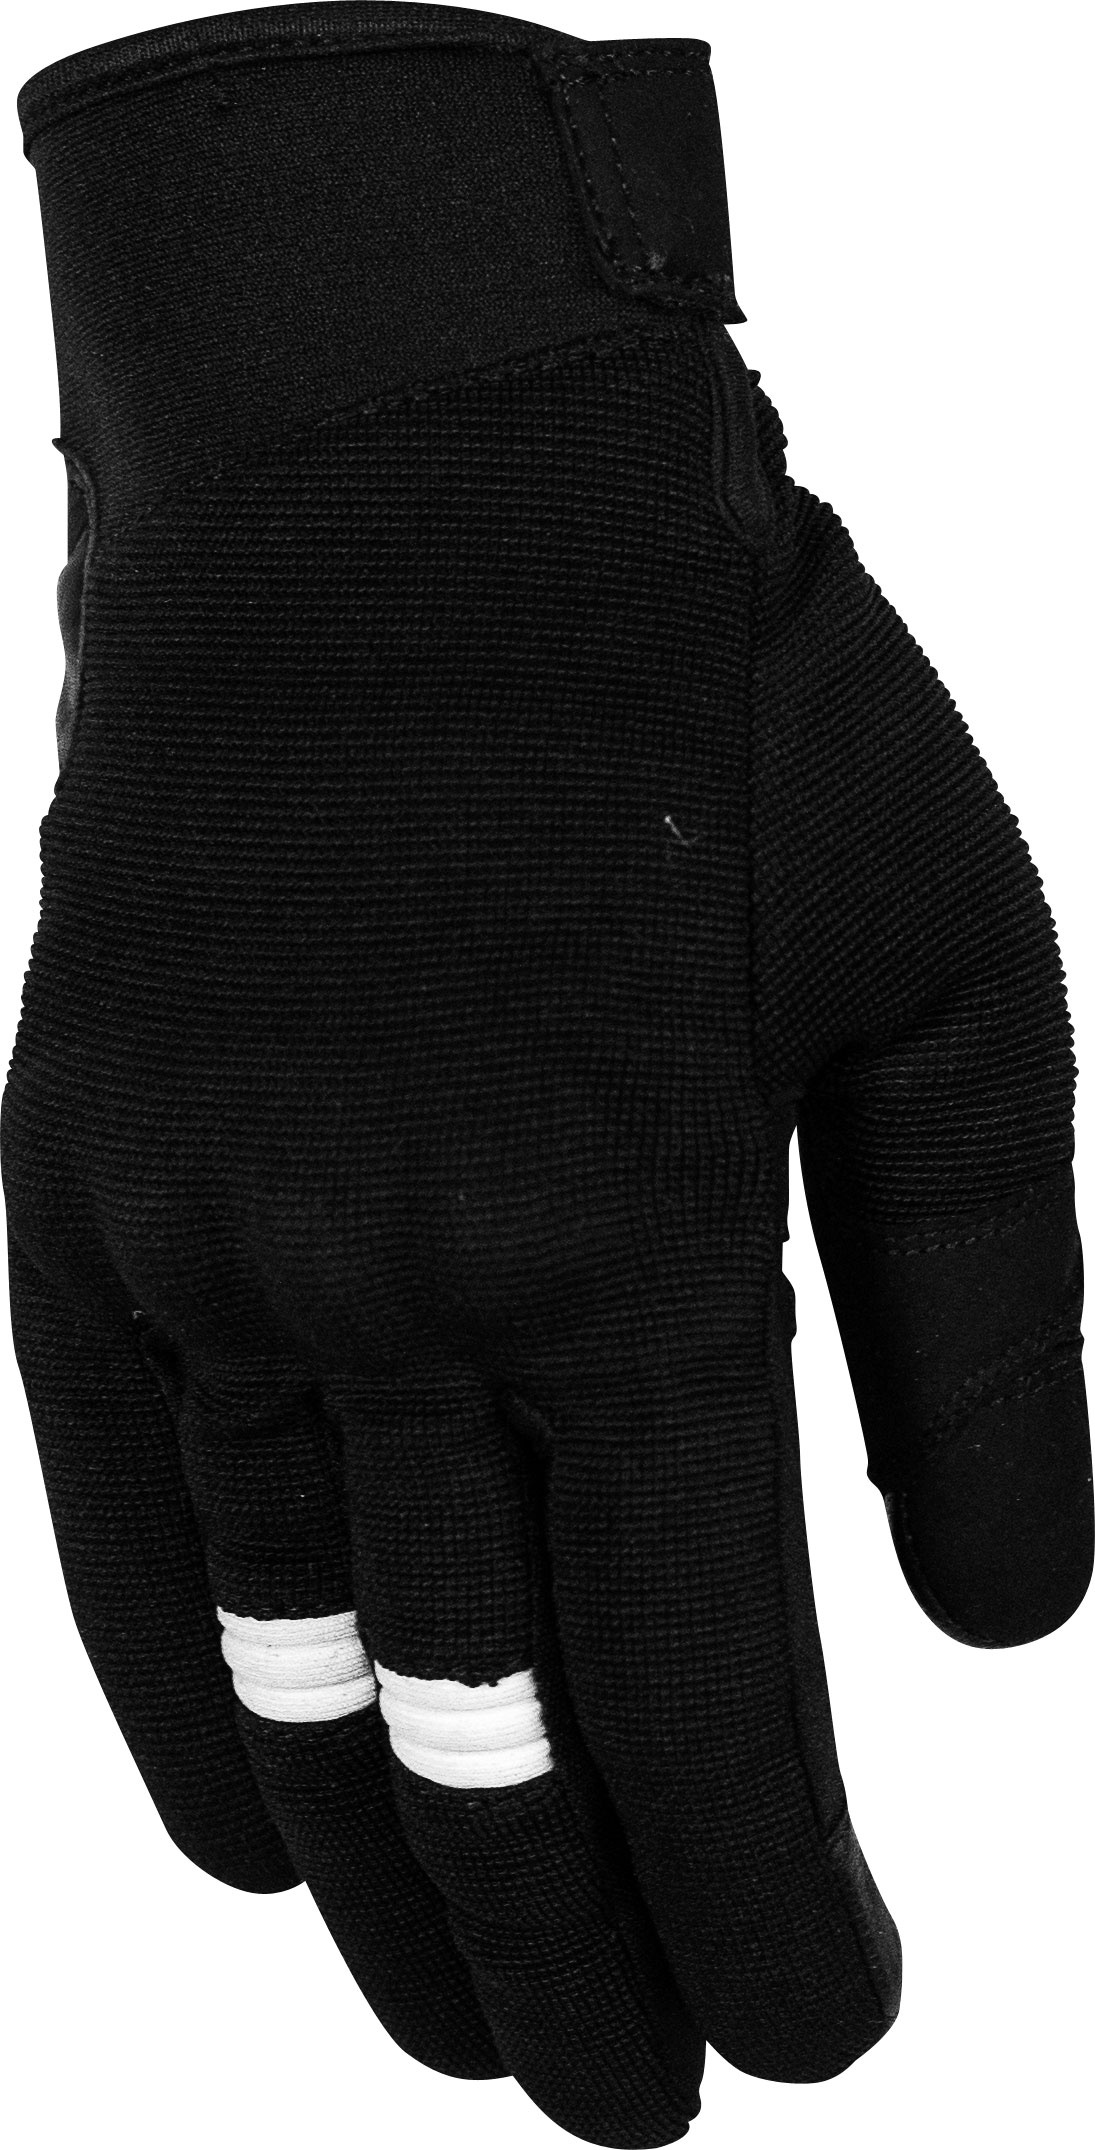 Rusty Stitches Bonnie V2, gants femmes - Noir/Blanc - XL